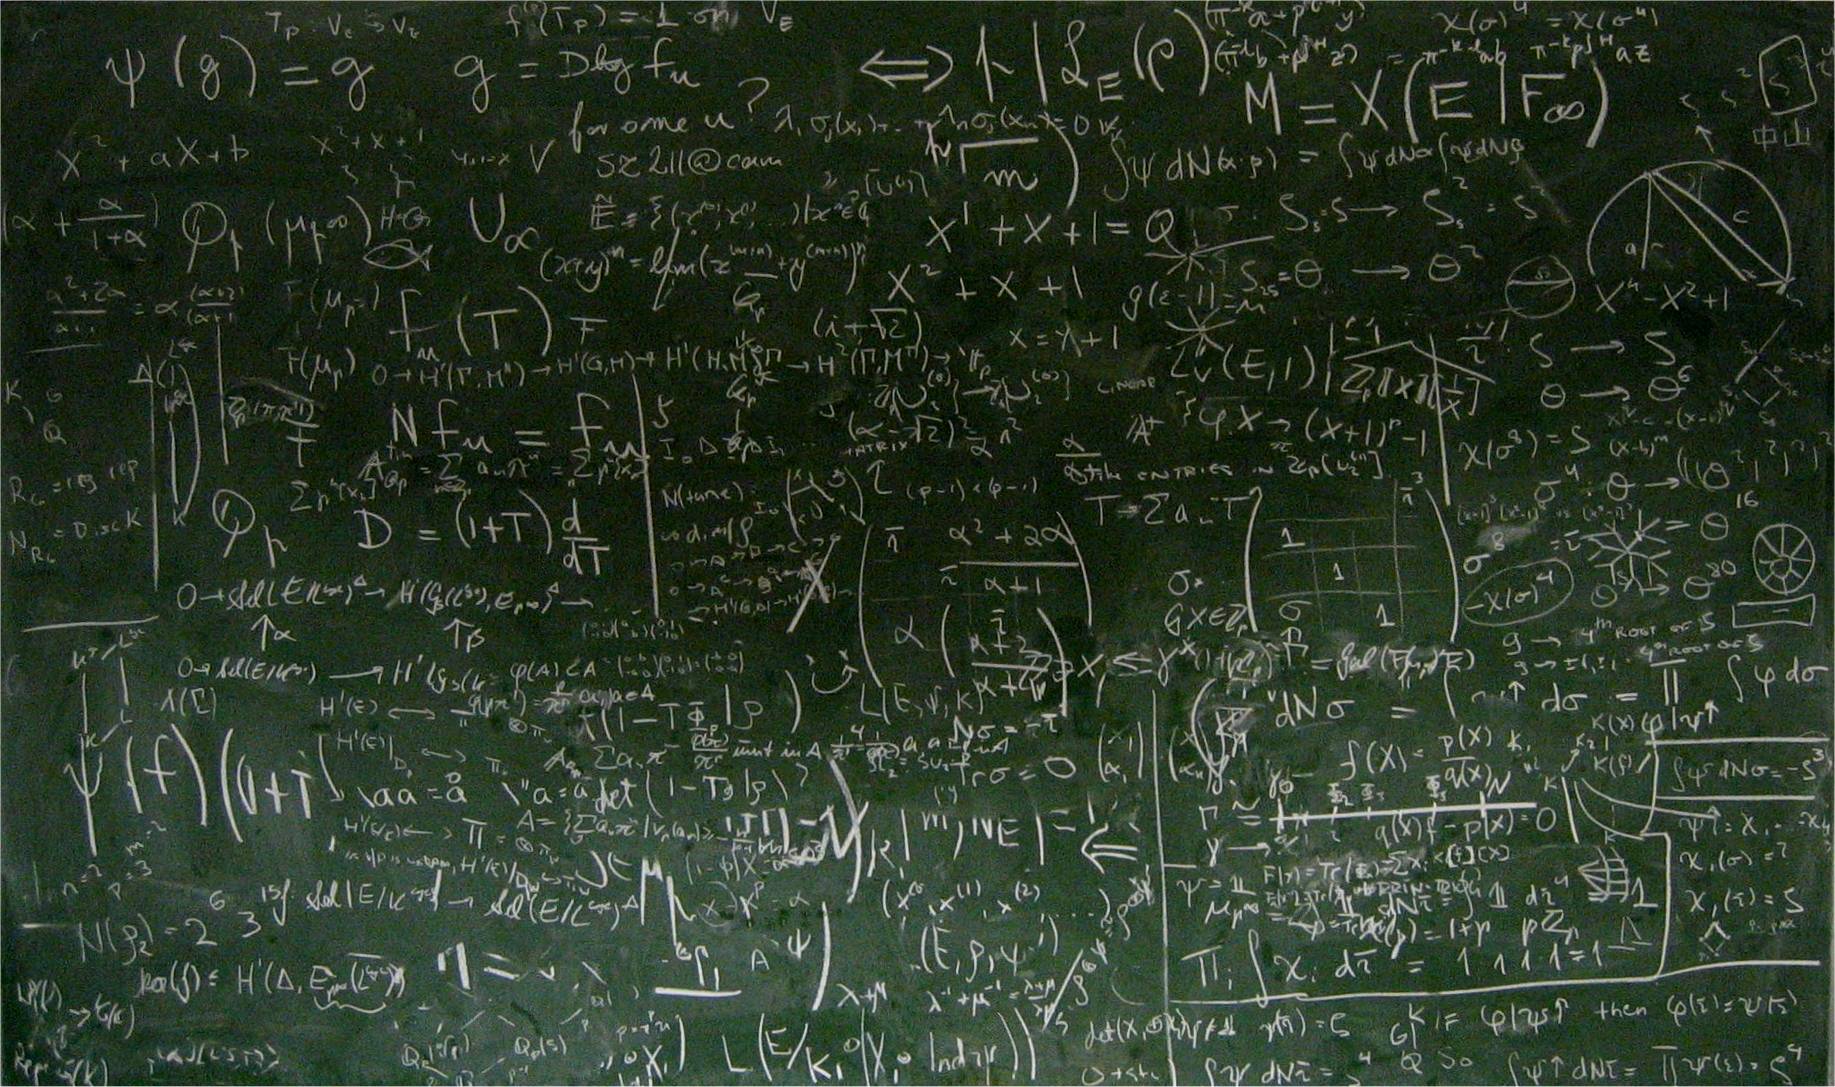 Mathematics Background